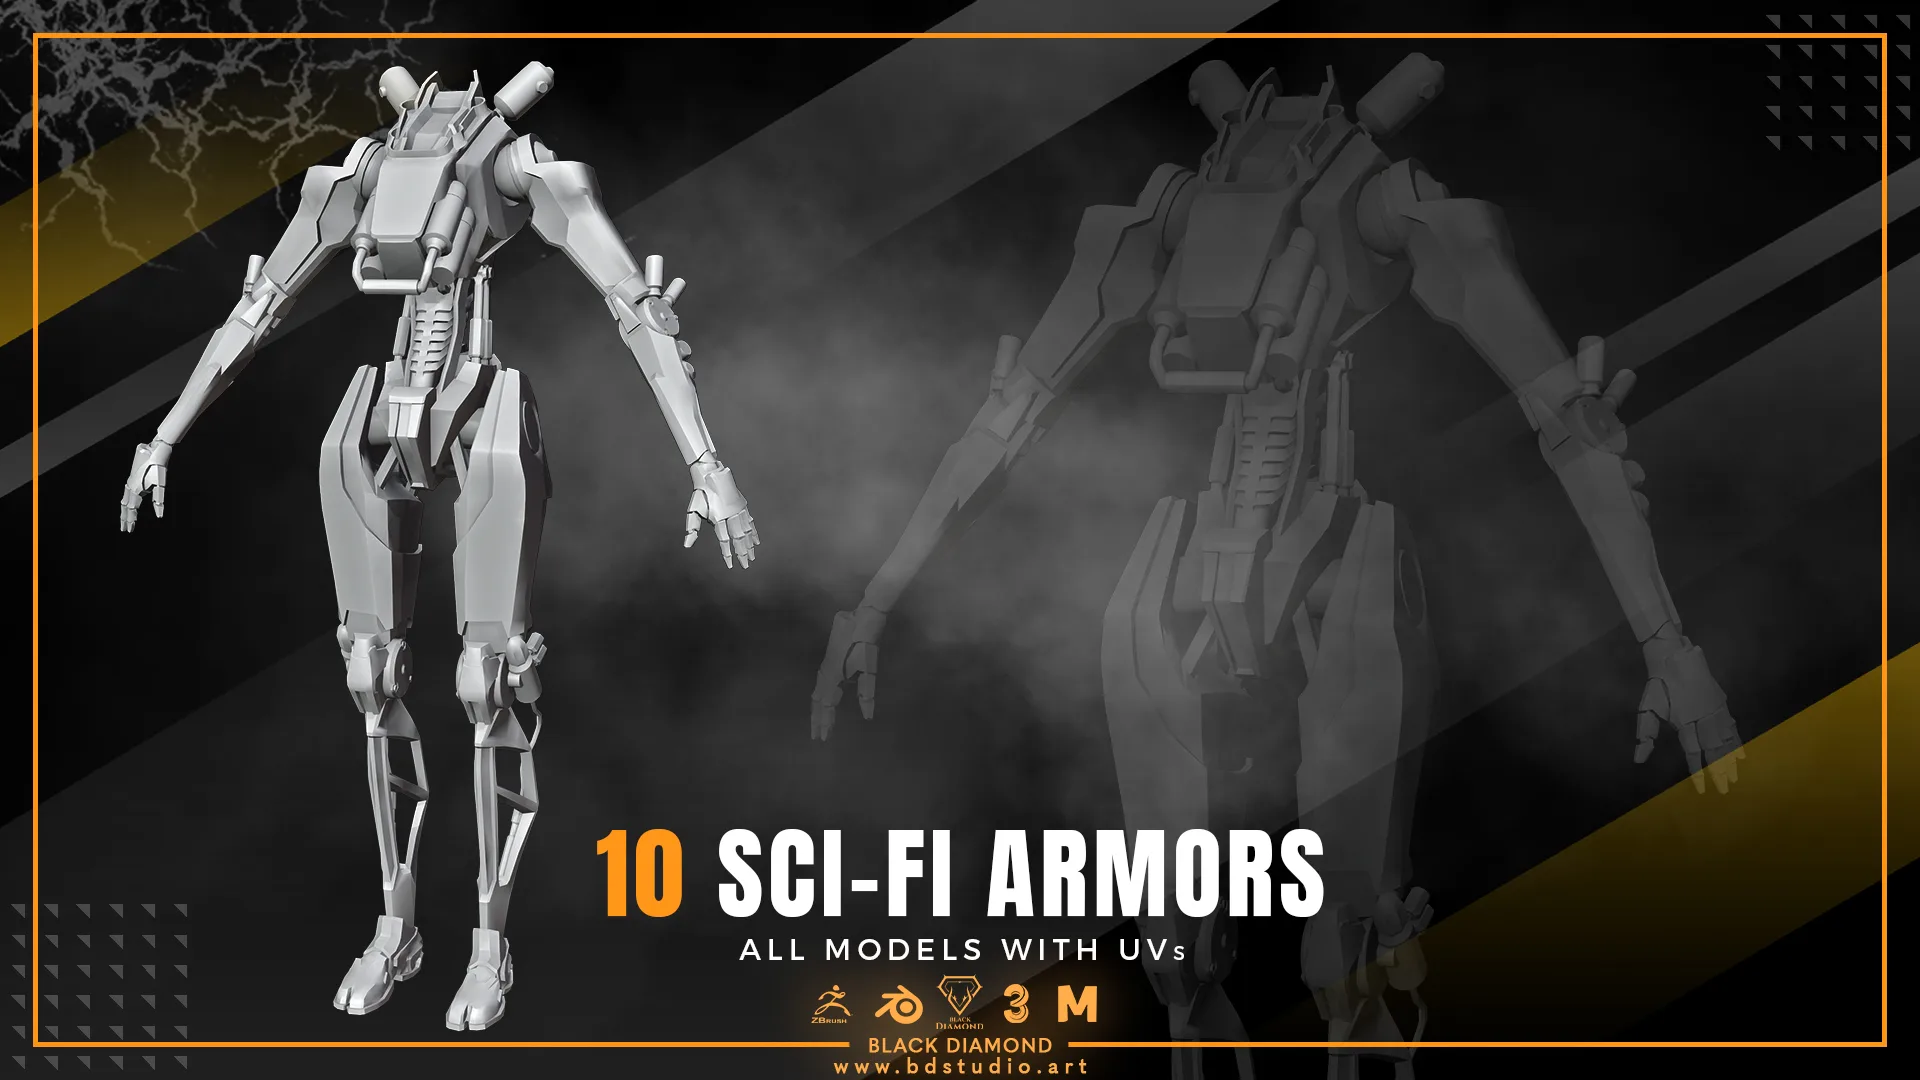 10 SCI-FI ARMOR MODELS